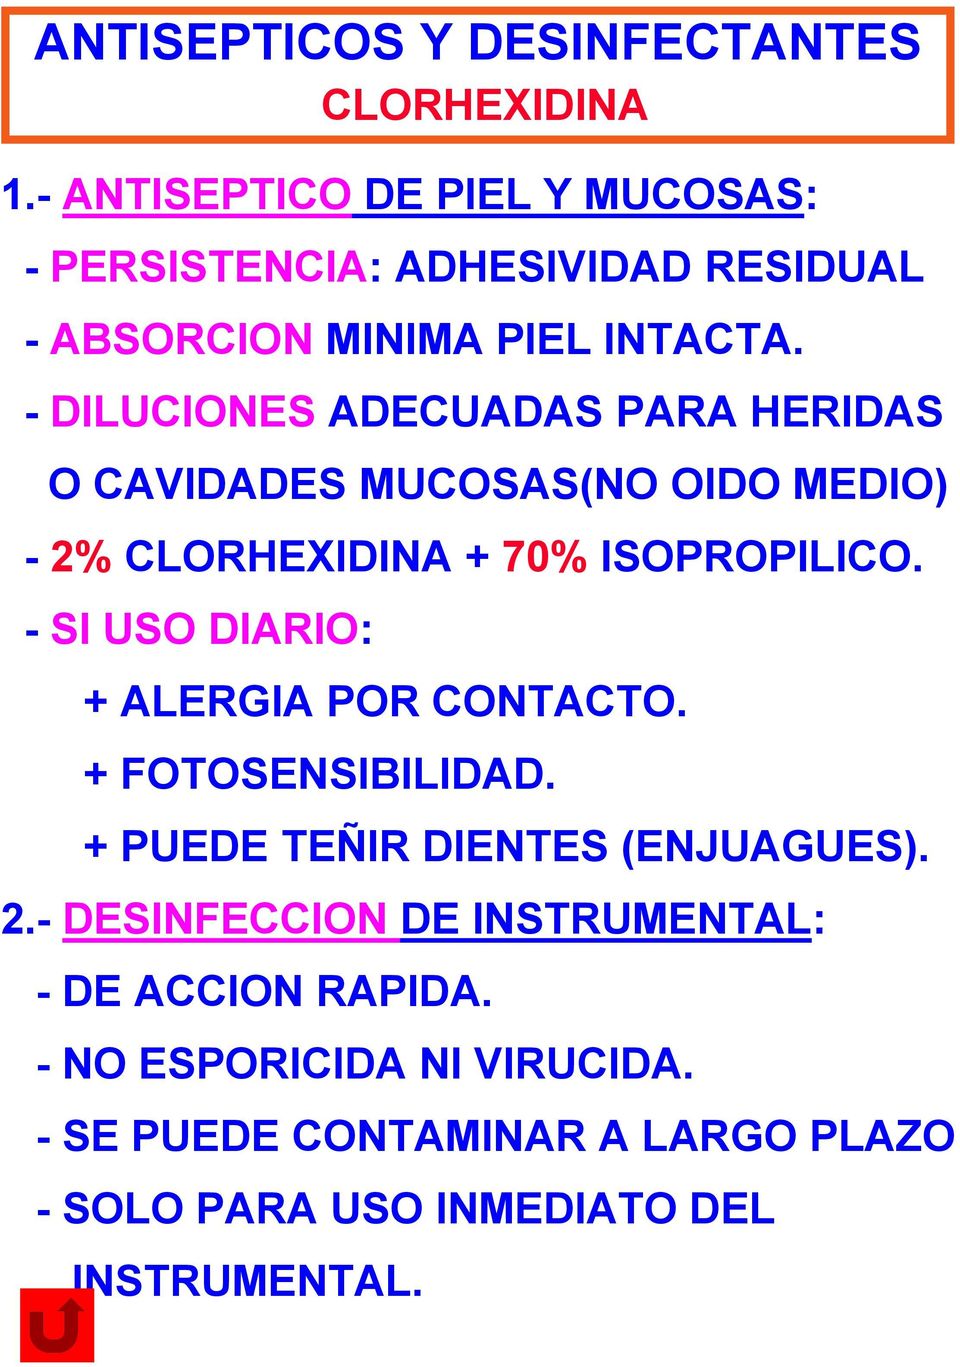 - DILUCIONES ADECUADAS PARA HERIDAS O CAVIDADES MUCOSAS(NO OIDO MEDIO) - 2% CLORHEXIDINA + 70% ISOPROPILICO.